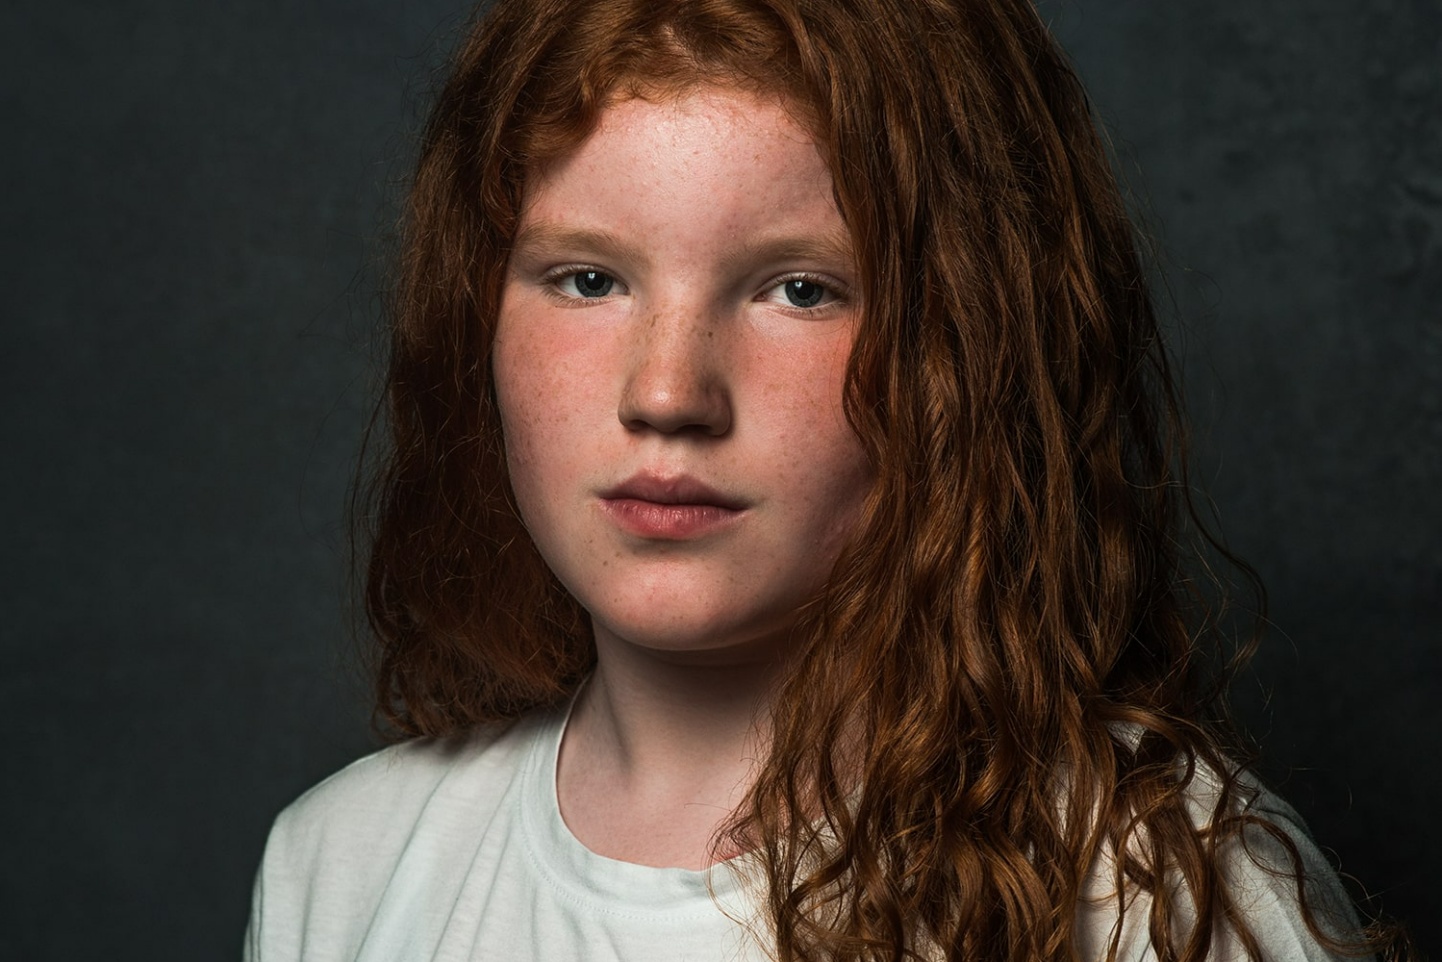 Ruby aged 11 from the series Being Inbetween (c) carolynmendelsohn